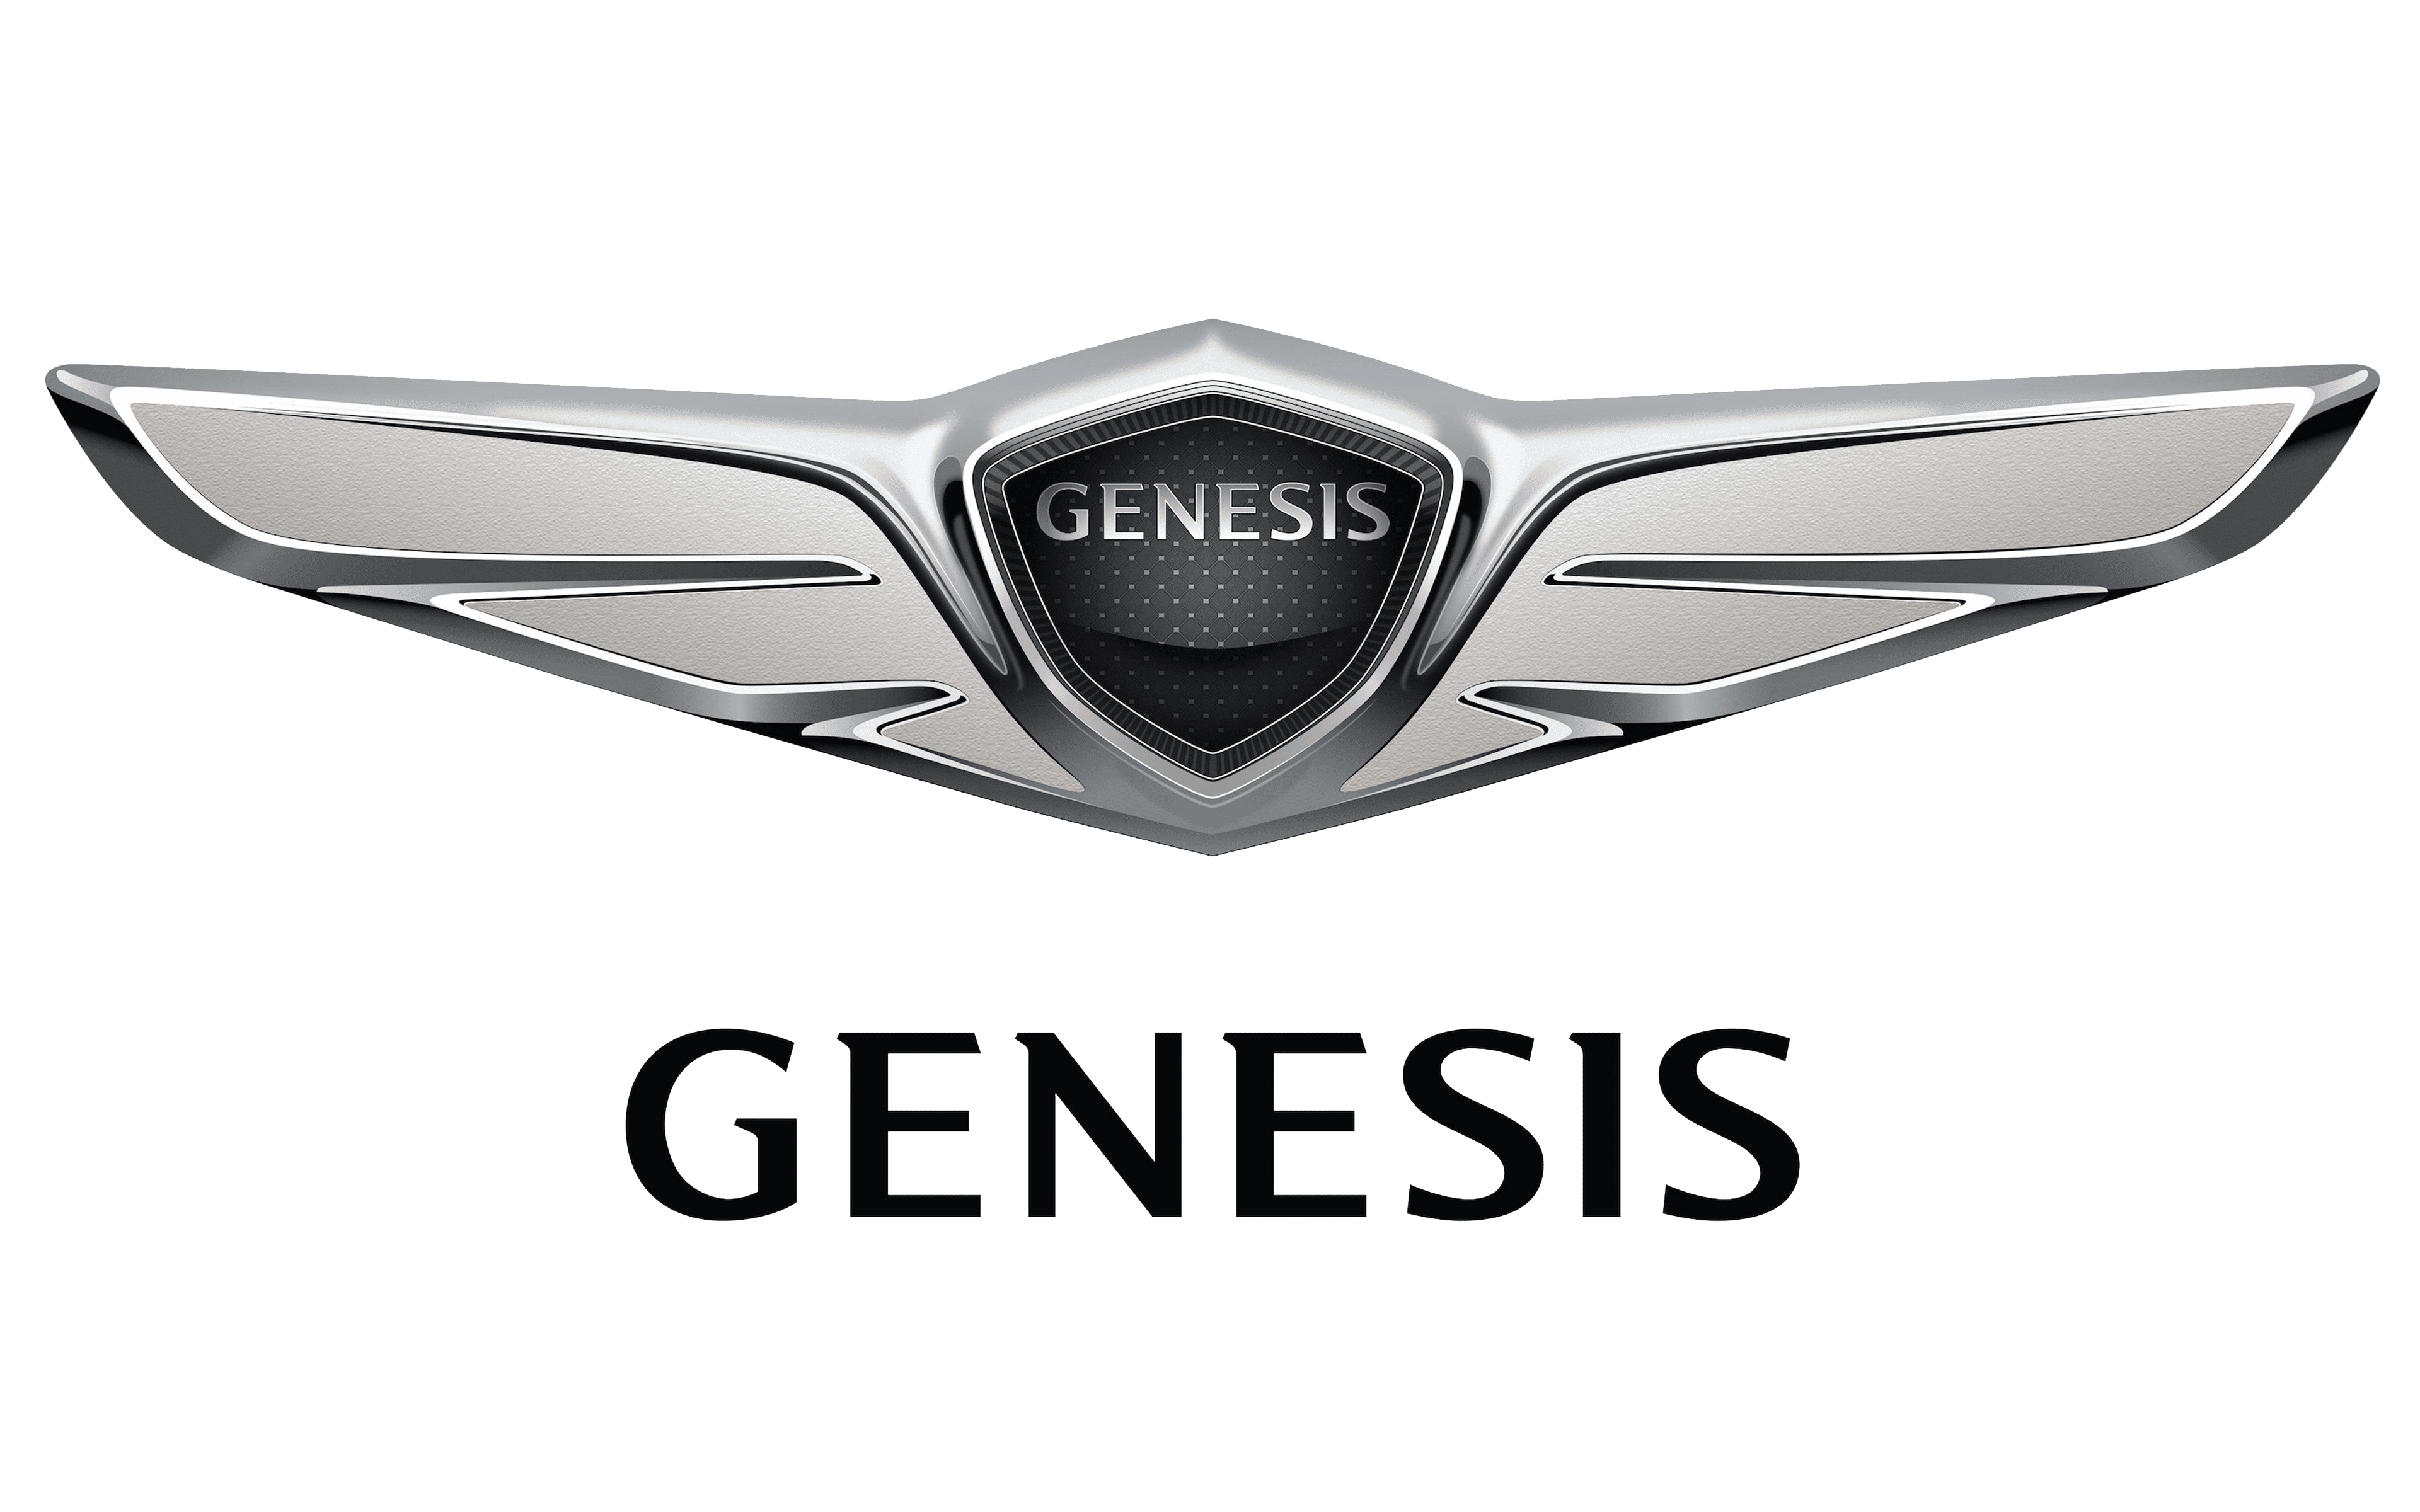 GENESIS Recalls